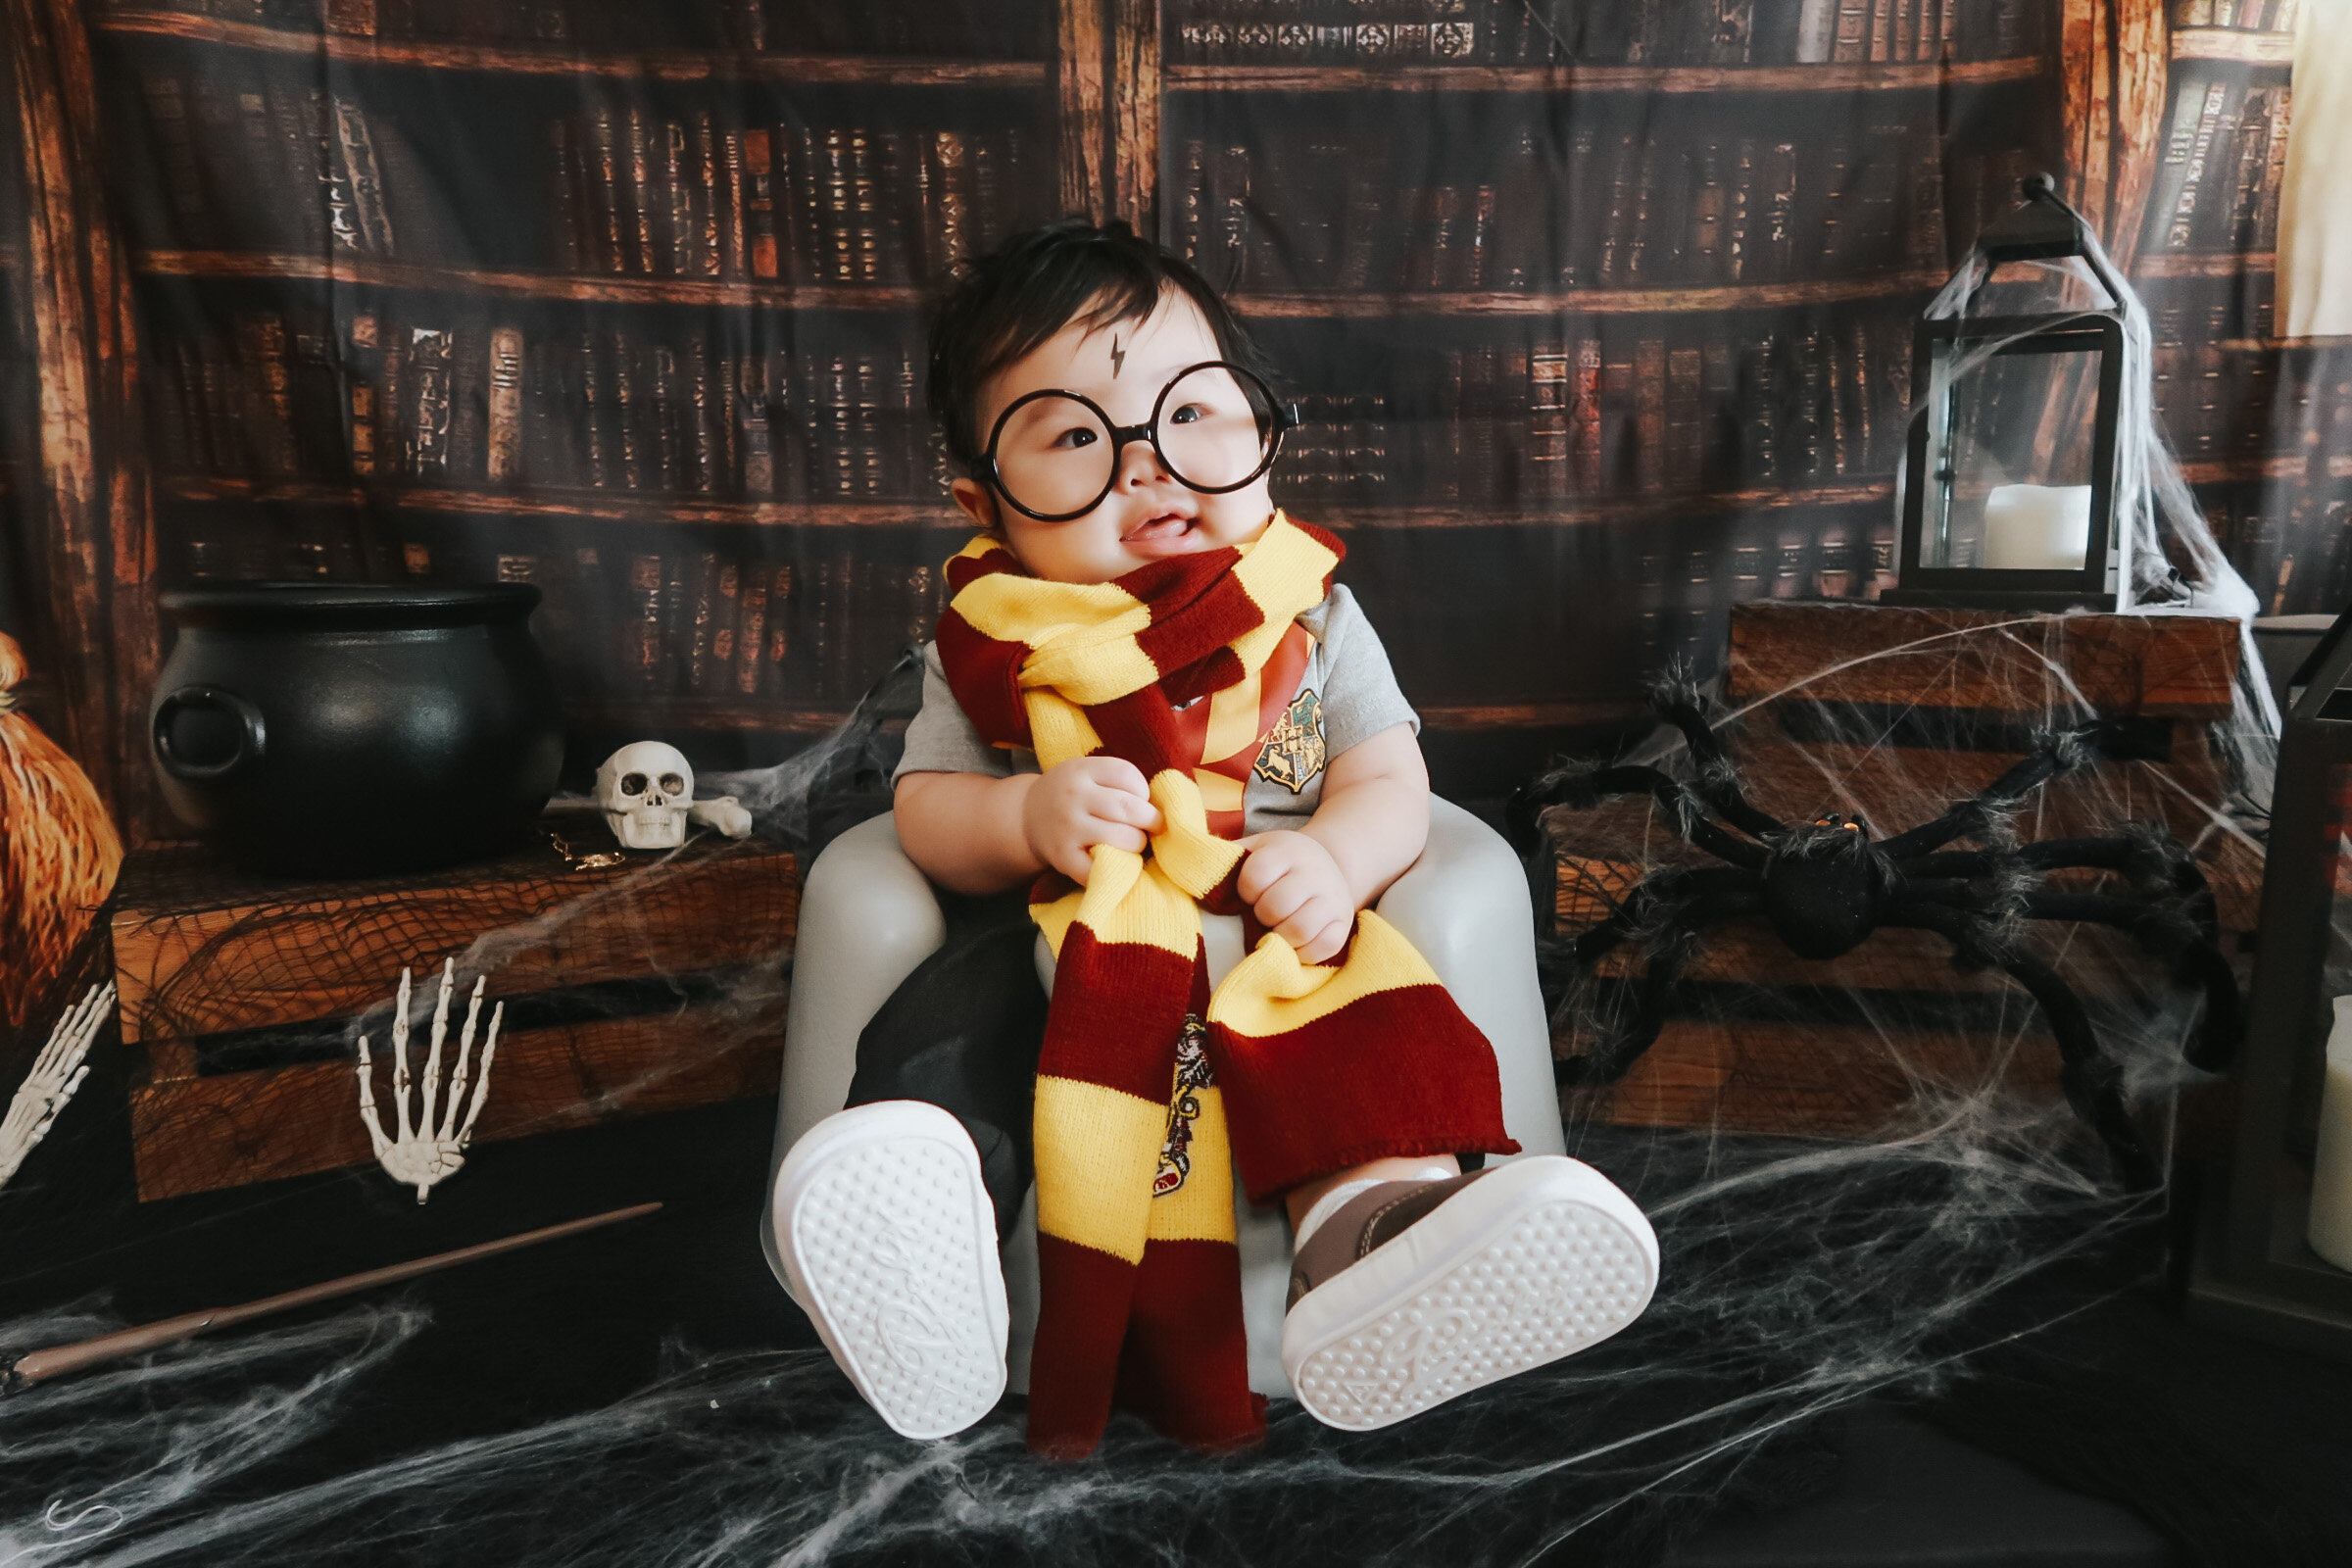 Harry Potter Costumes & Accessories - HalloweenCostumes.com